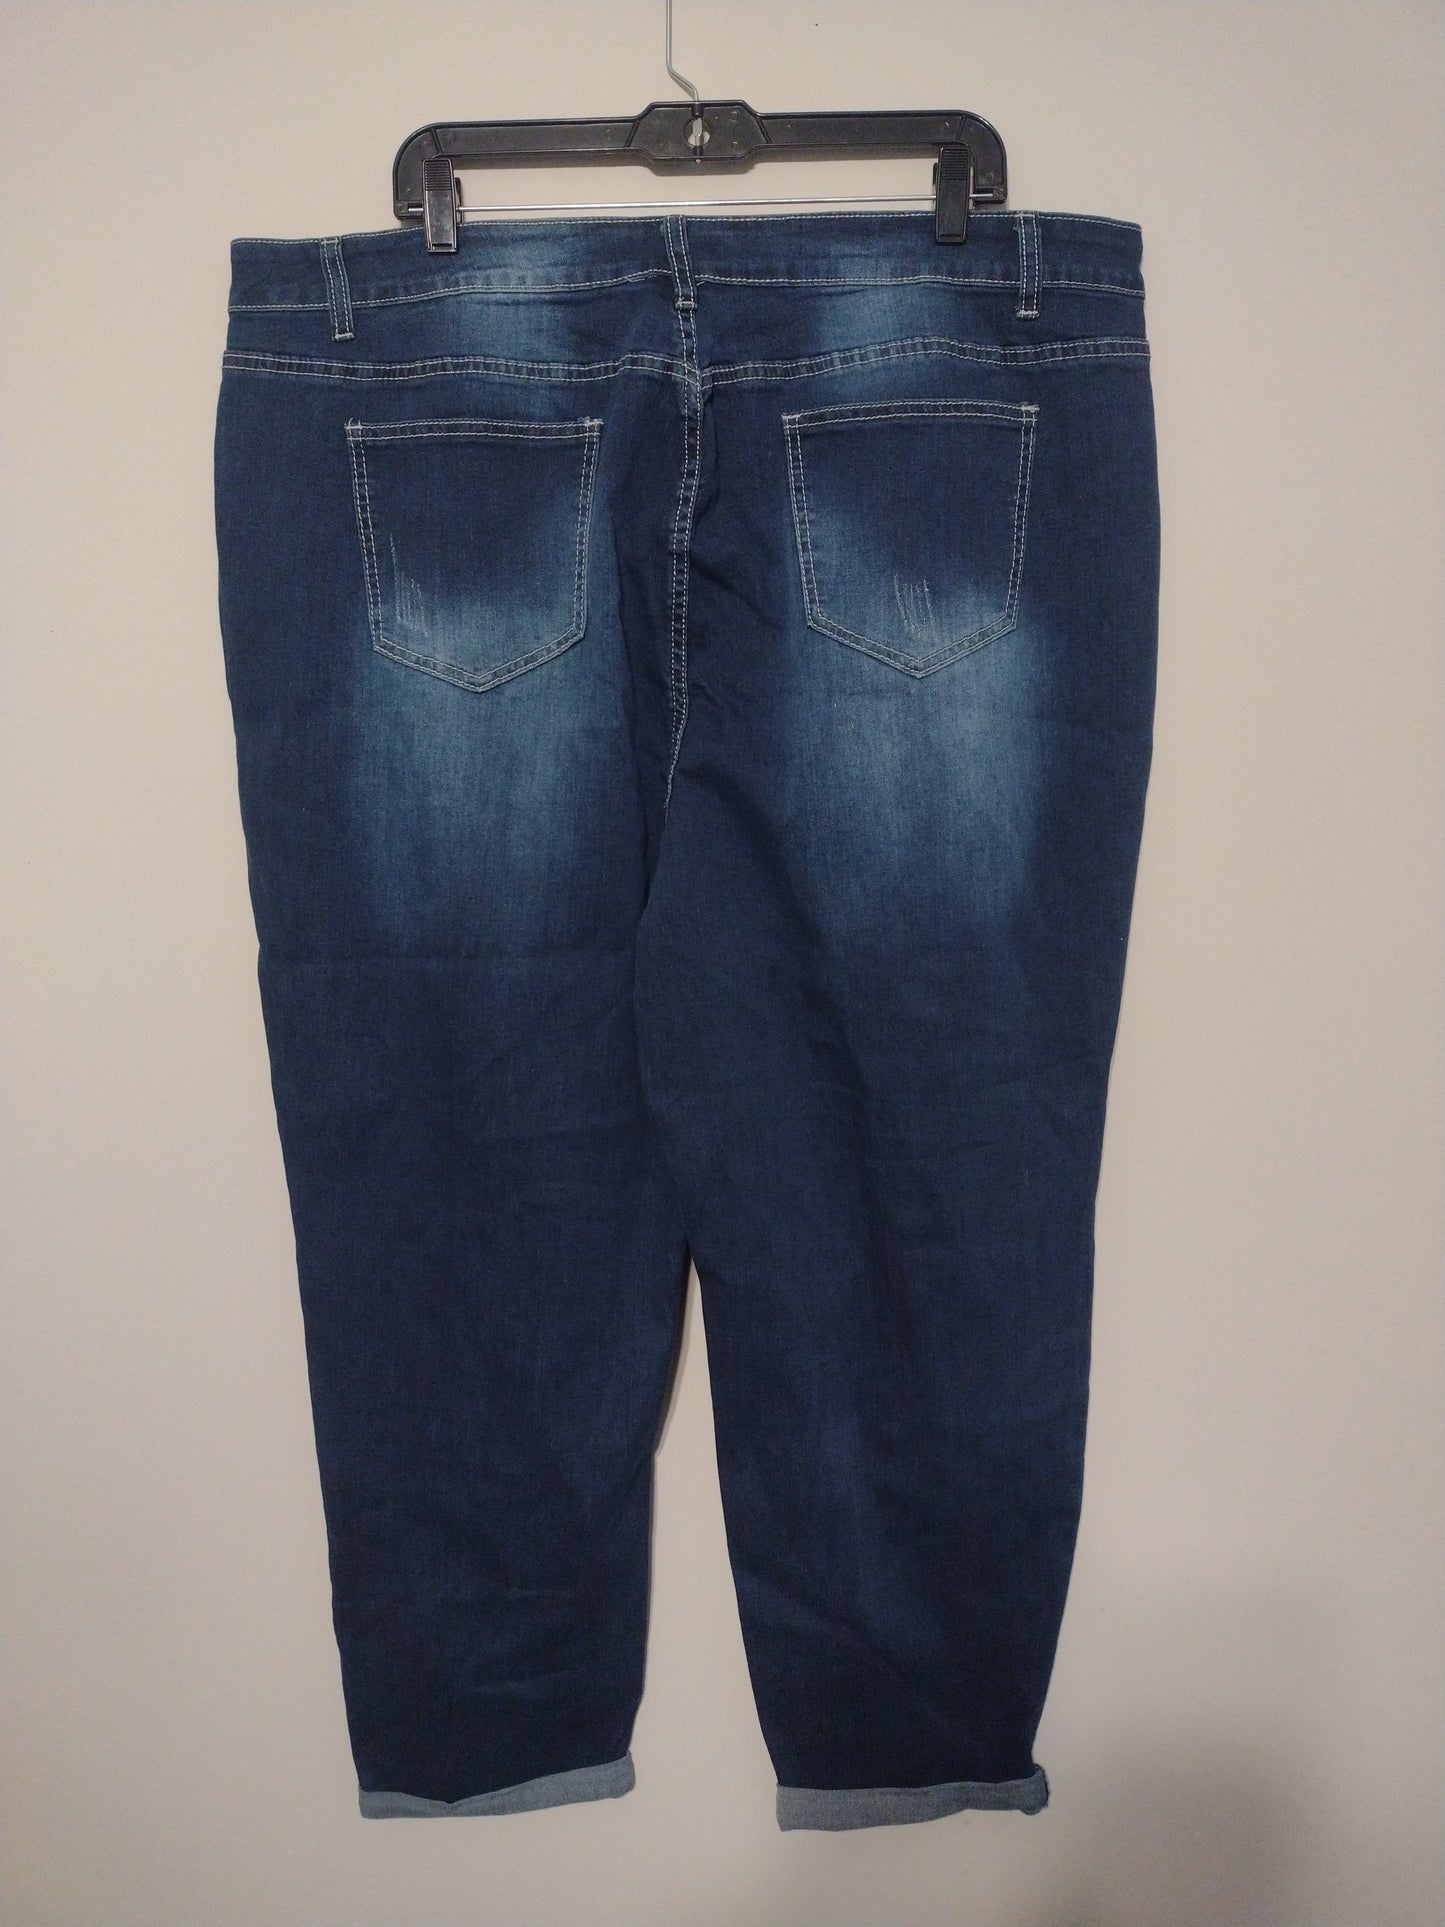 Jeans Skinny By Ashley Stewart  Size: 22